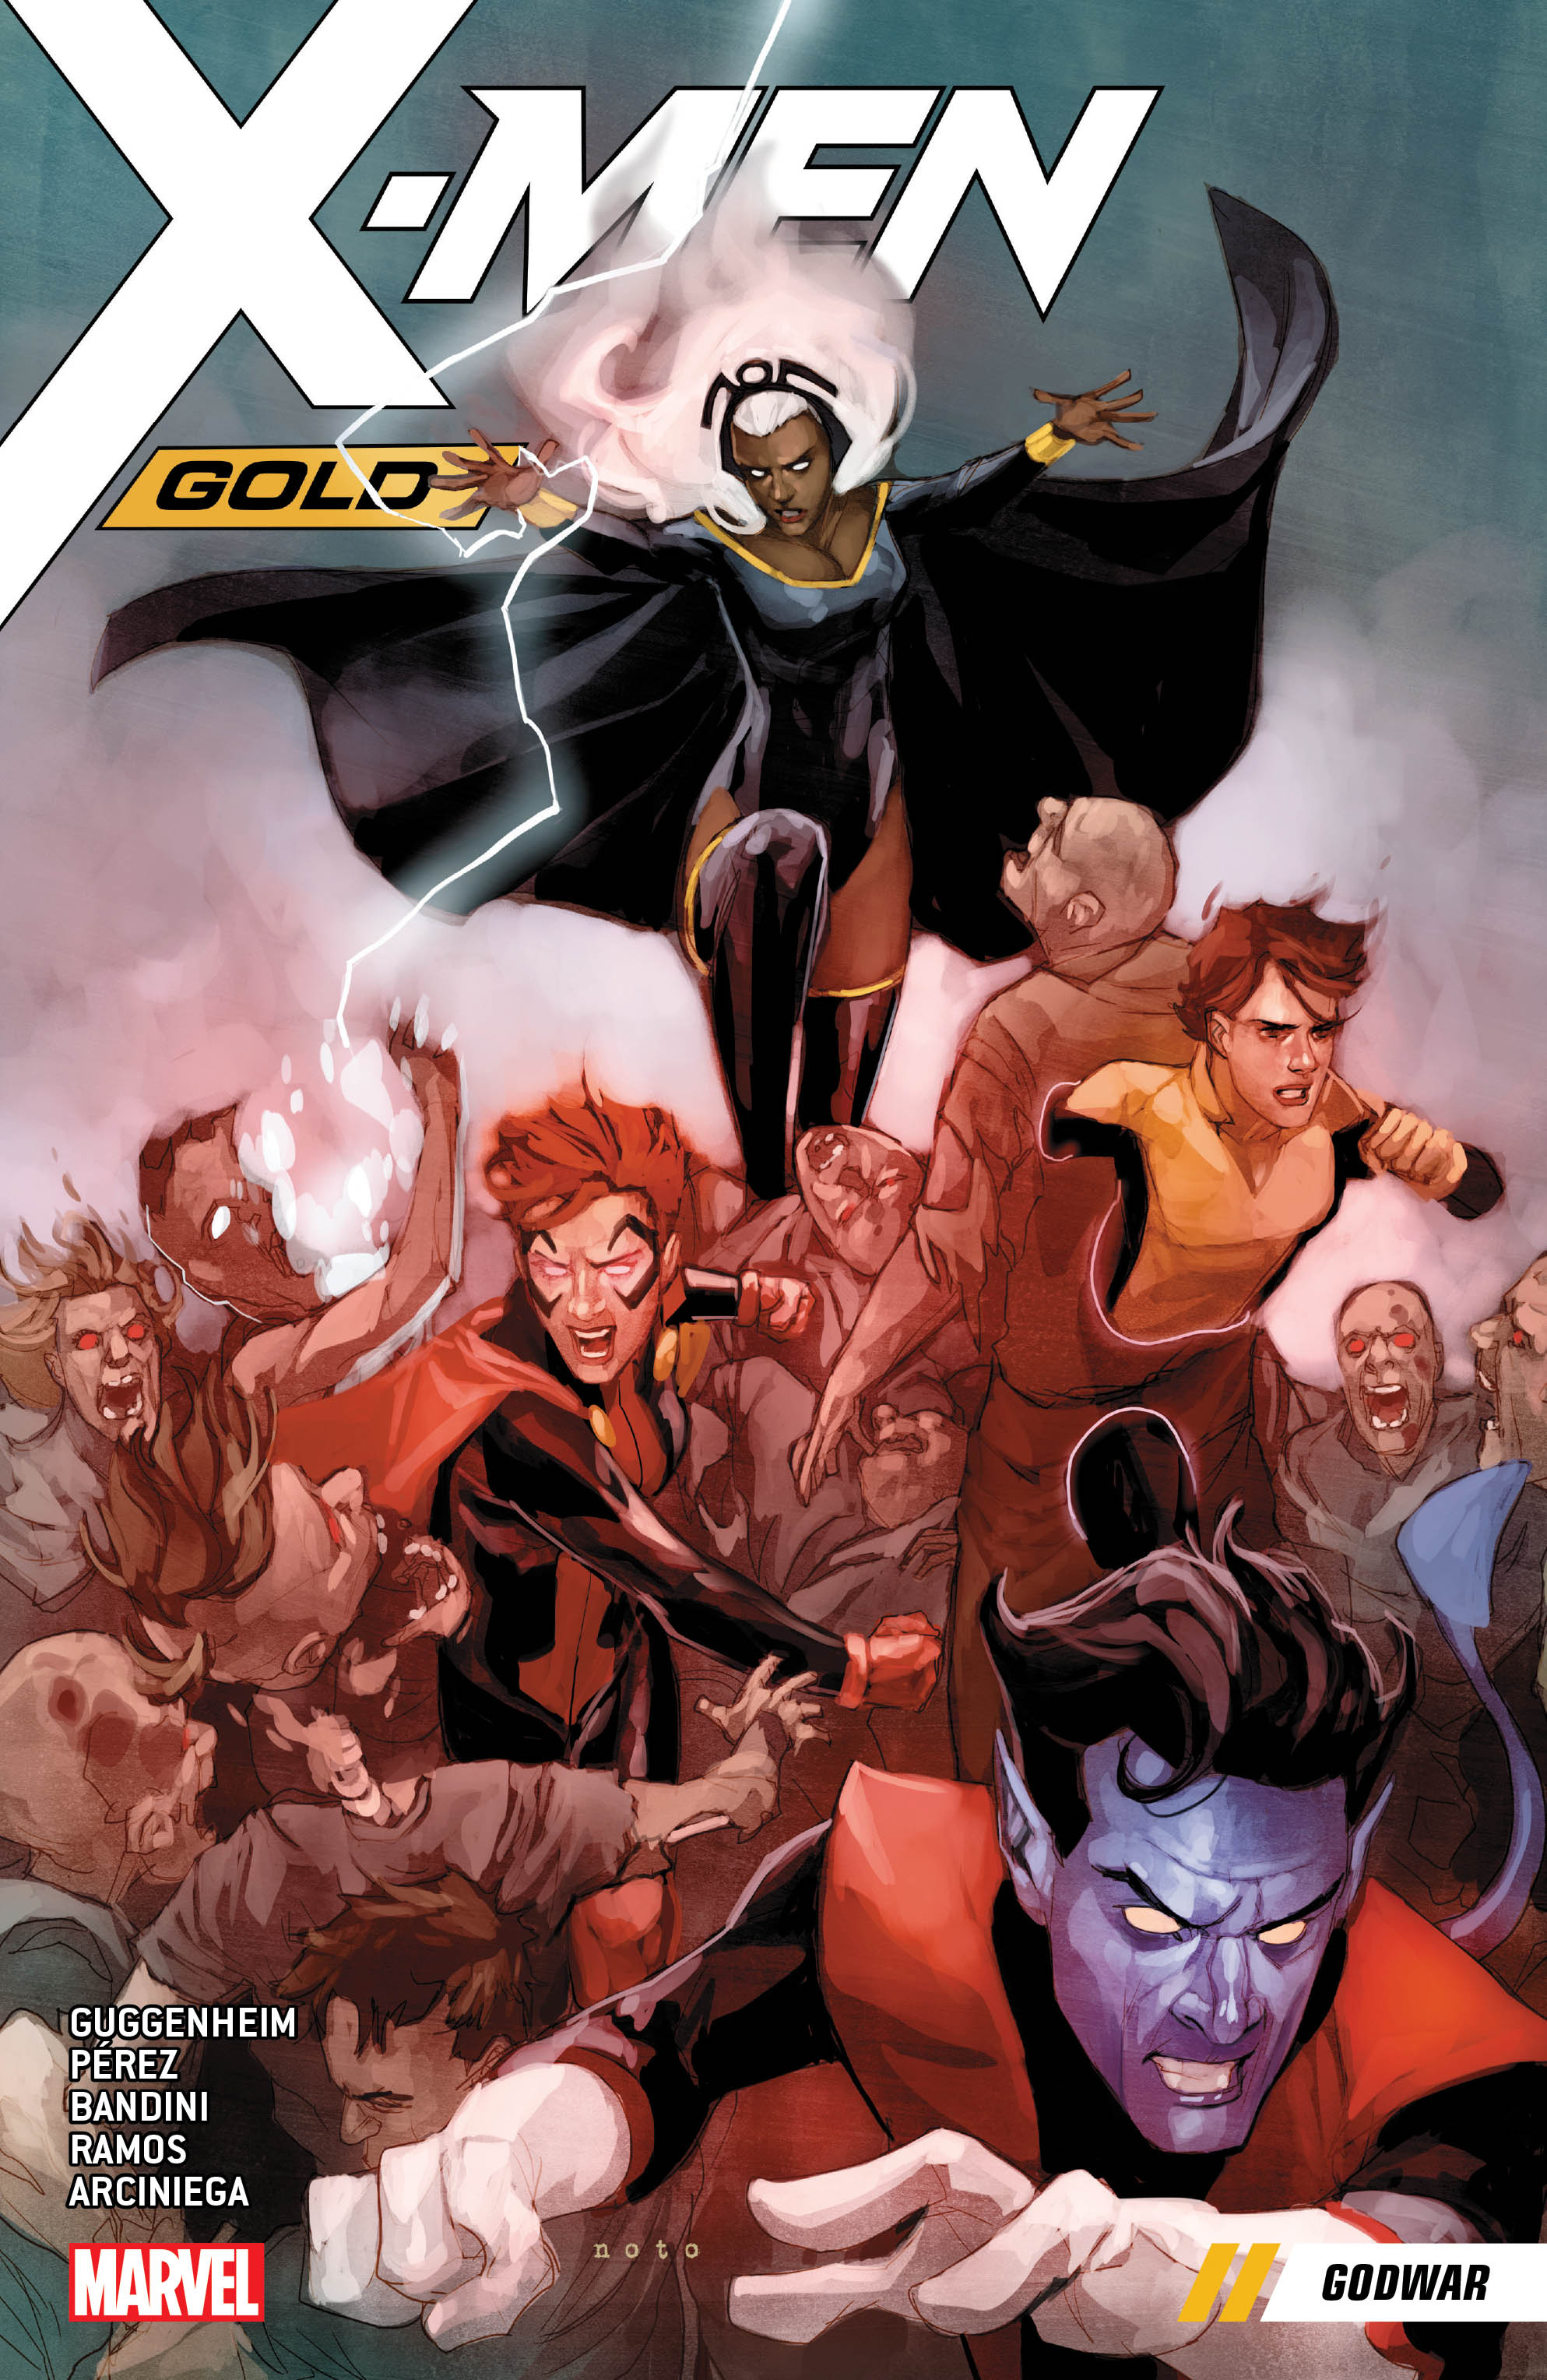 X-Men Gold Vol. 7: Godwar (Trade Paperback)